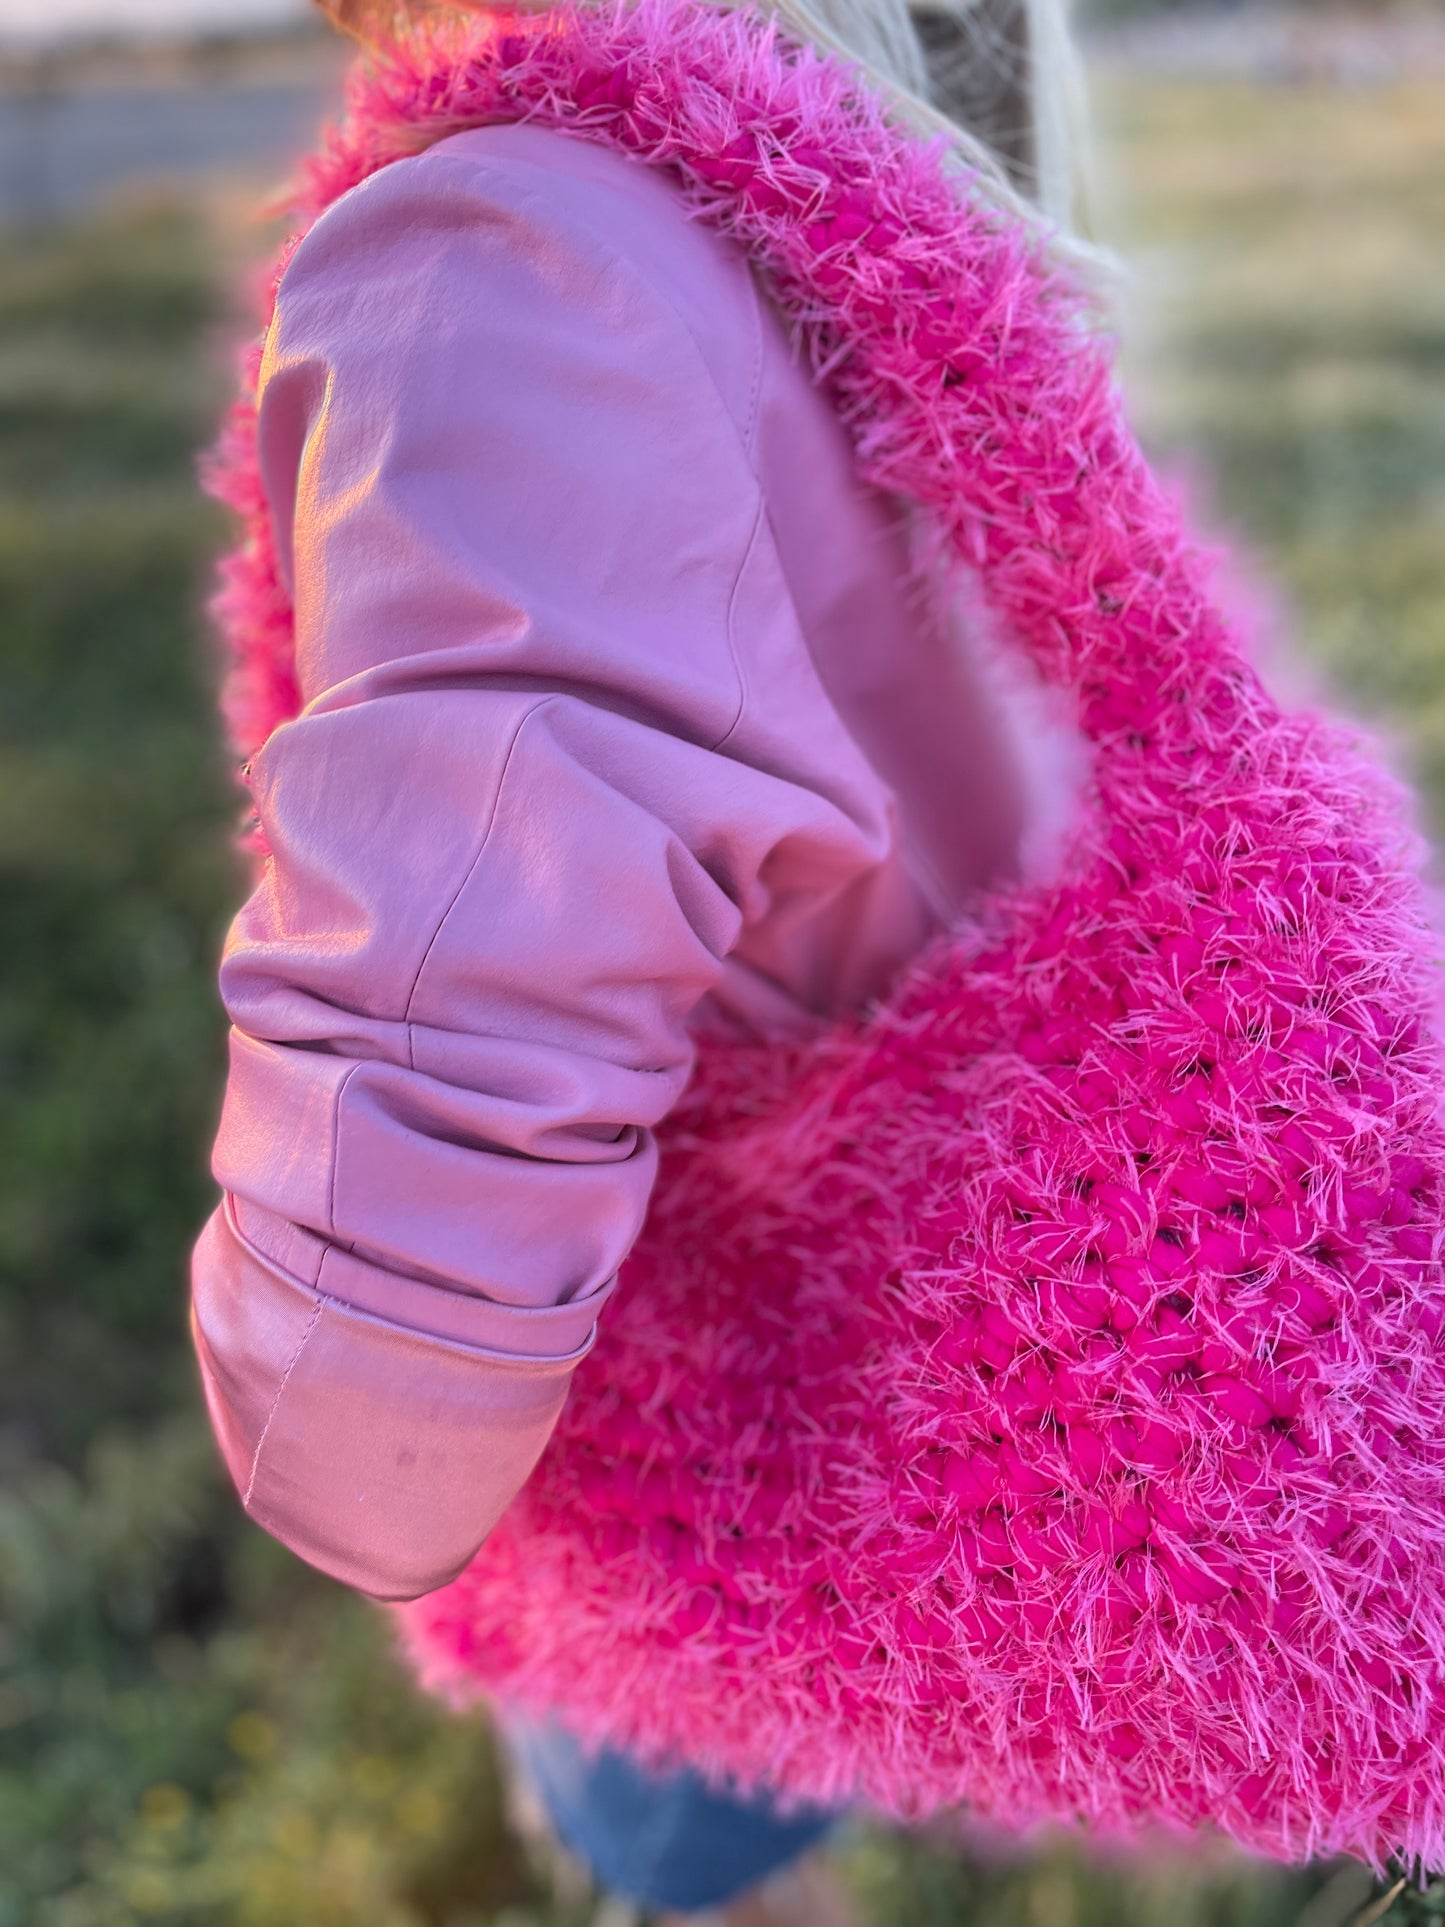 Hot Pink Crochet Bag - Fluffy - Large LIINA Bag